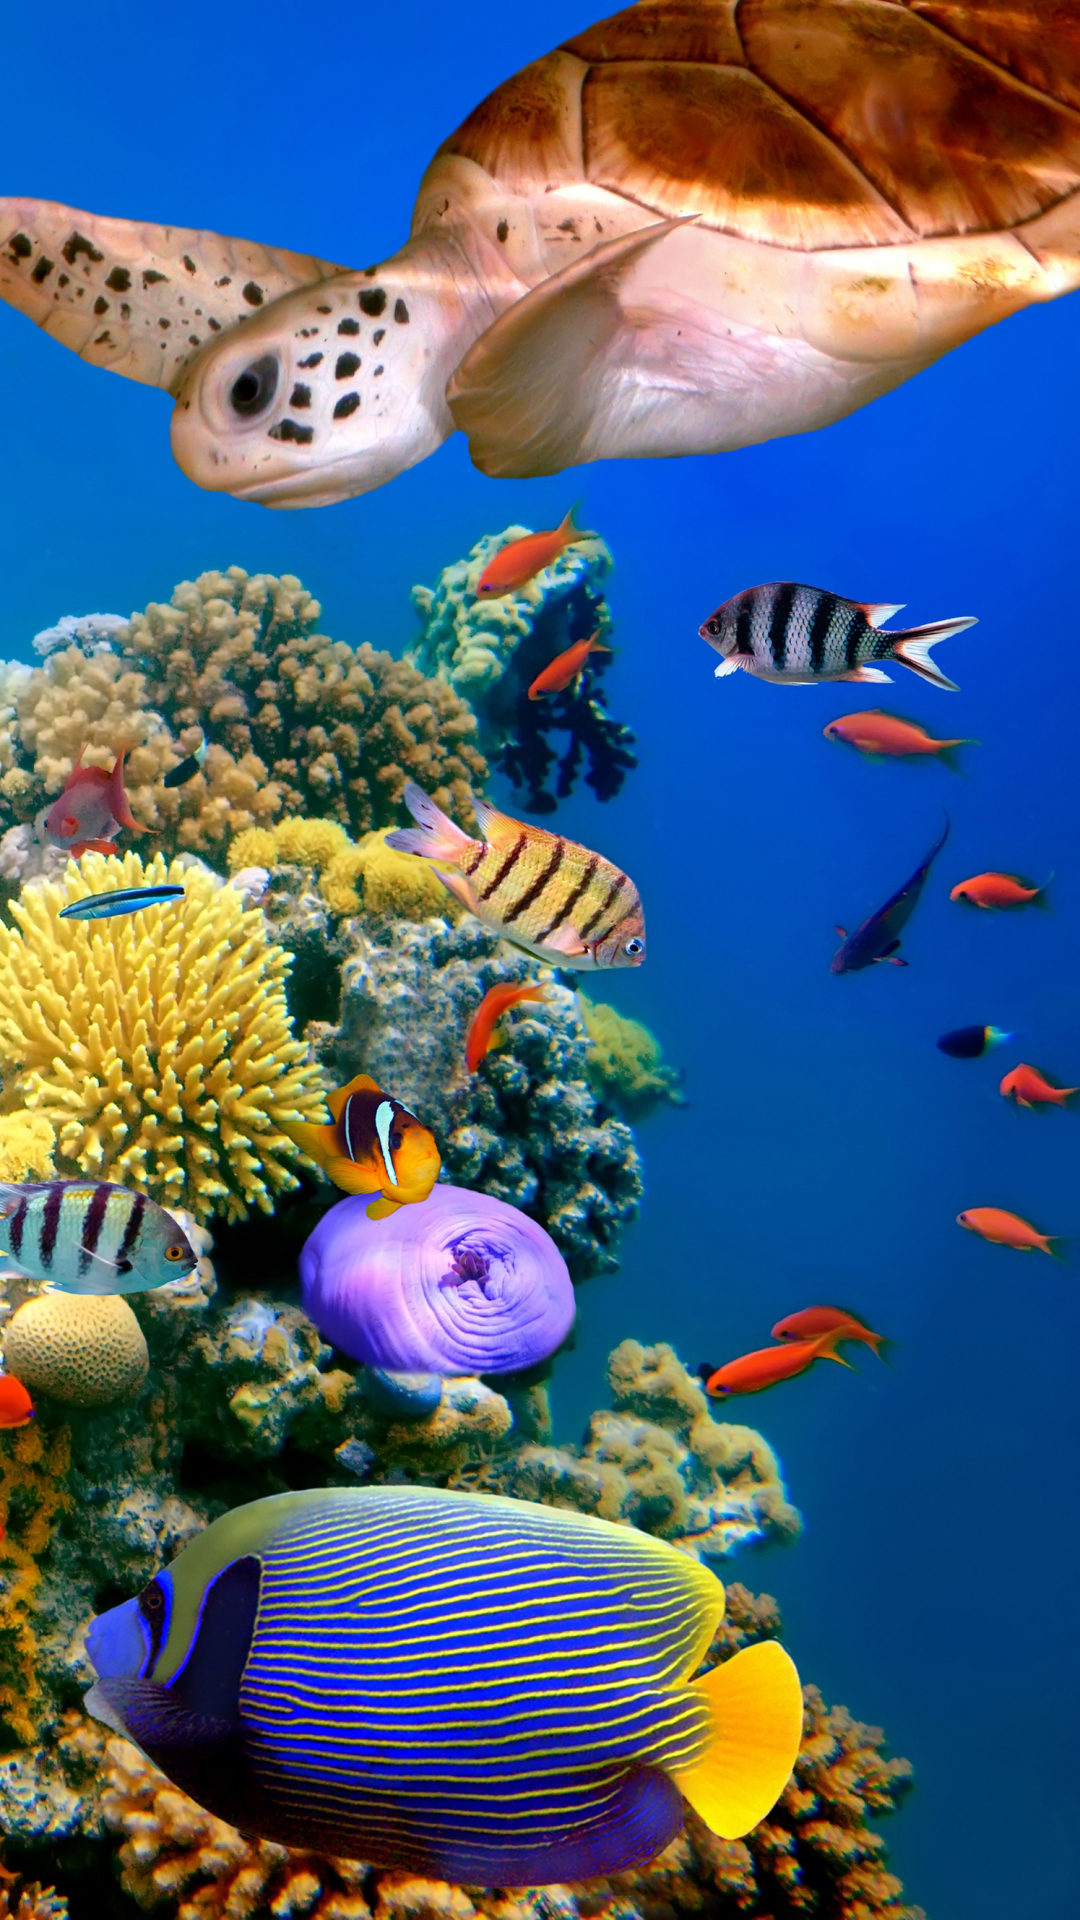 Aquarium coral reef fish wallpaper by xRebelYellx on DeviantArt